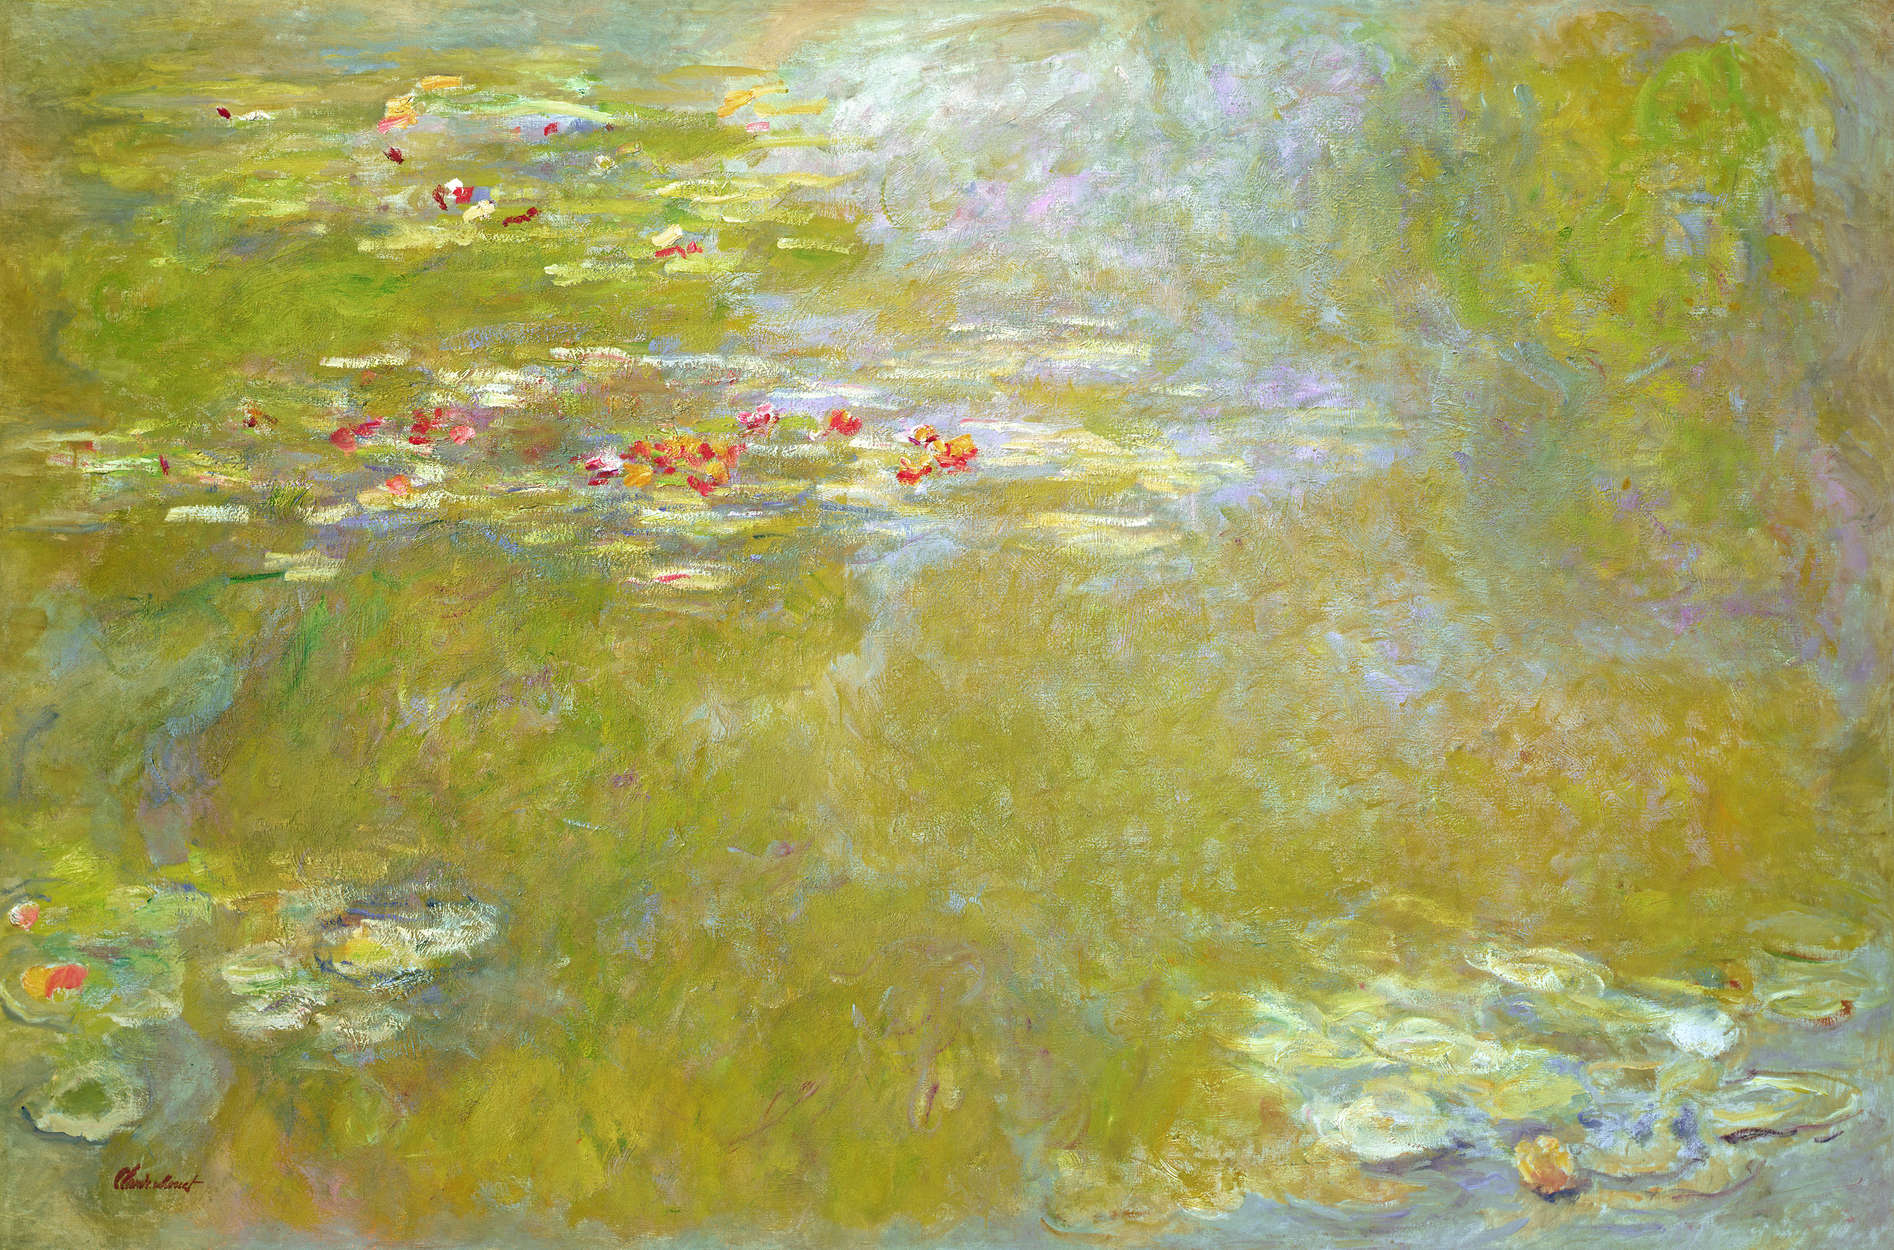             Mural "Las ninfas" de Claude Monet
        